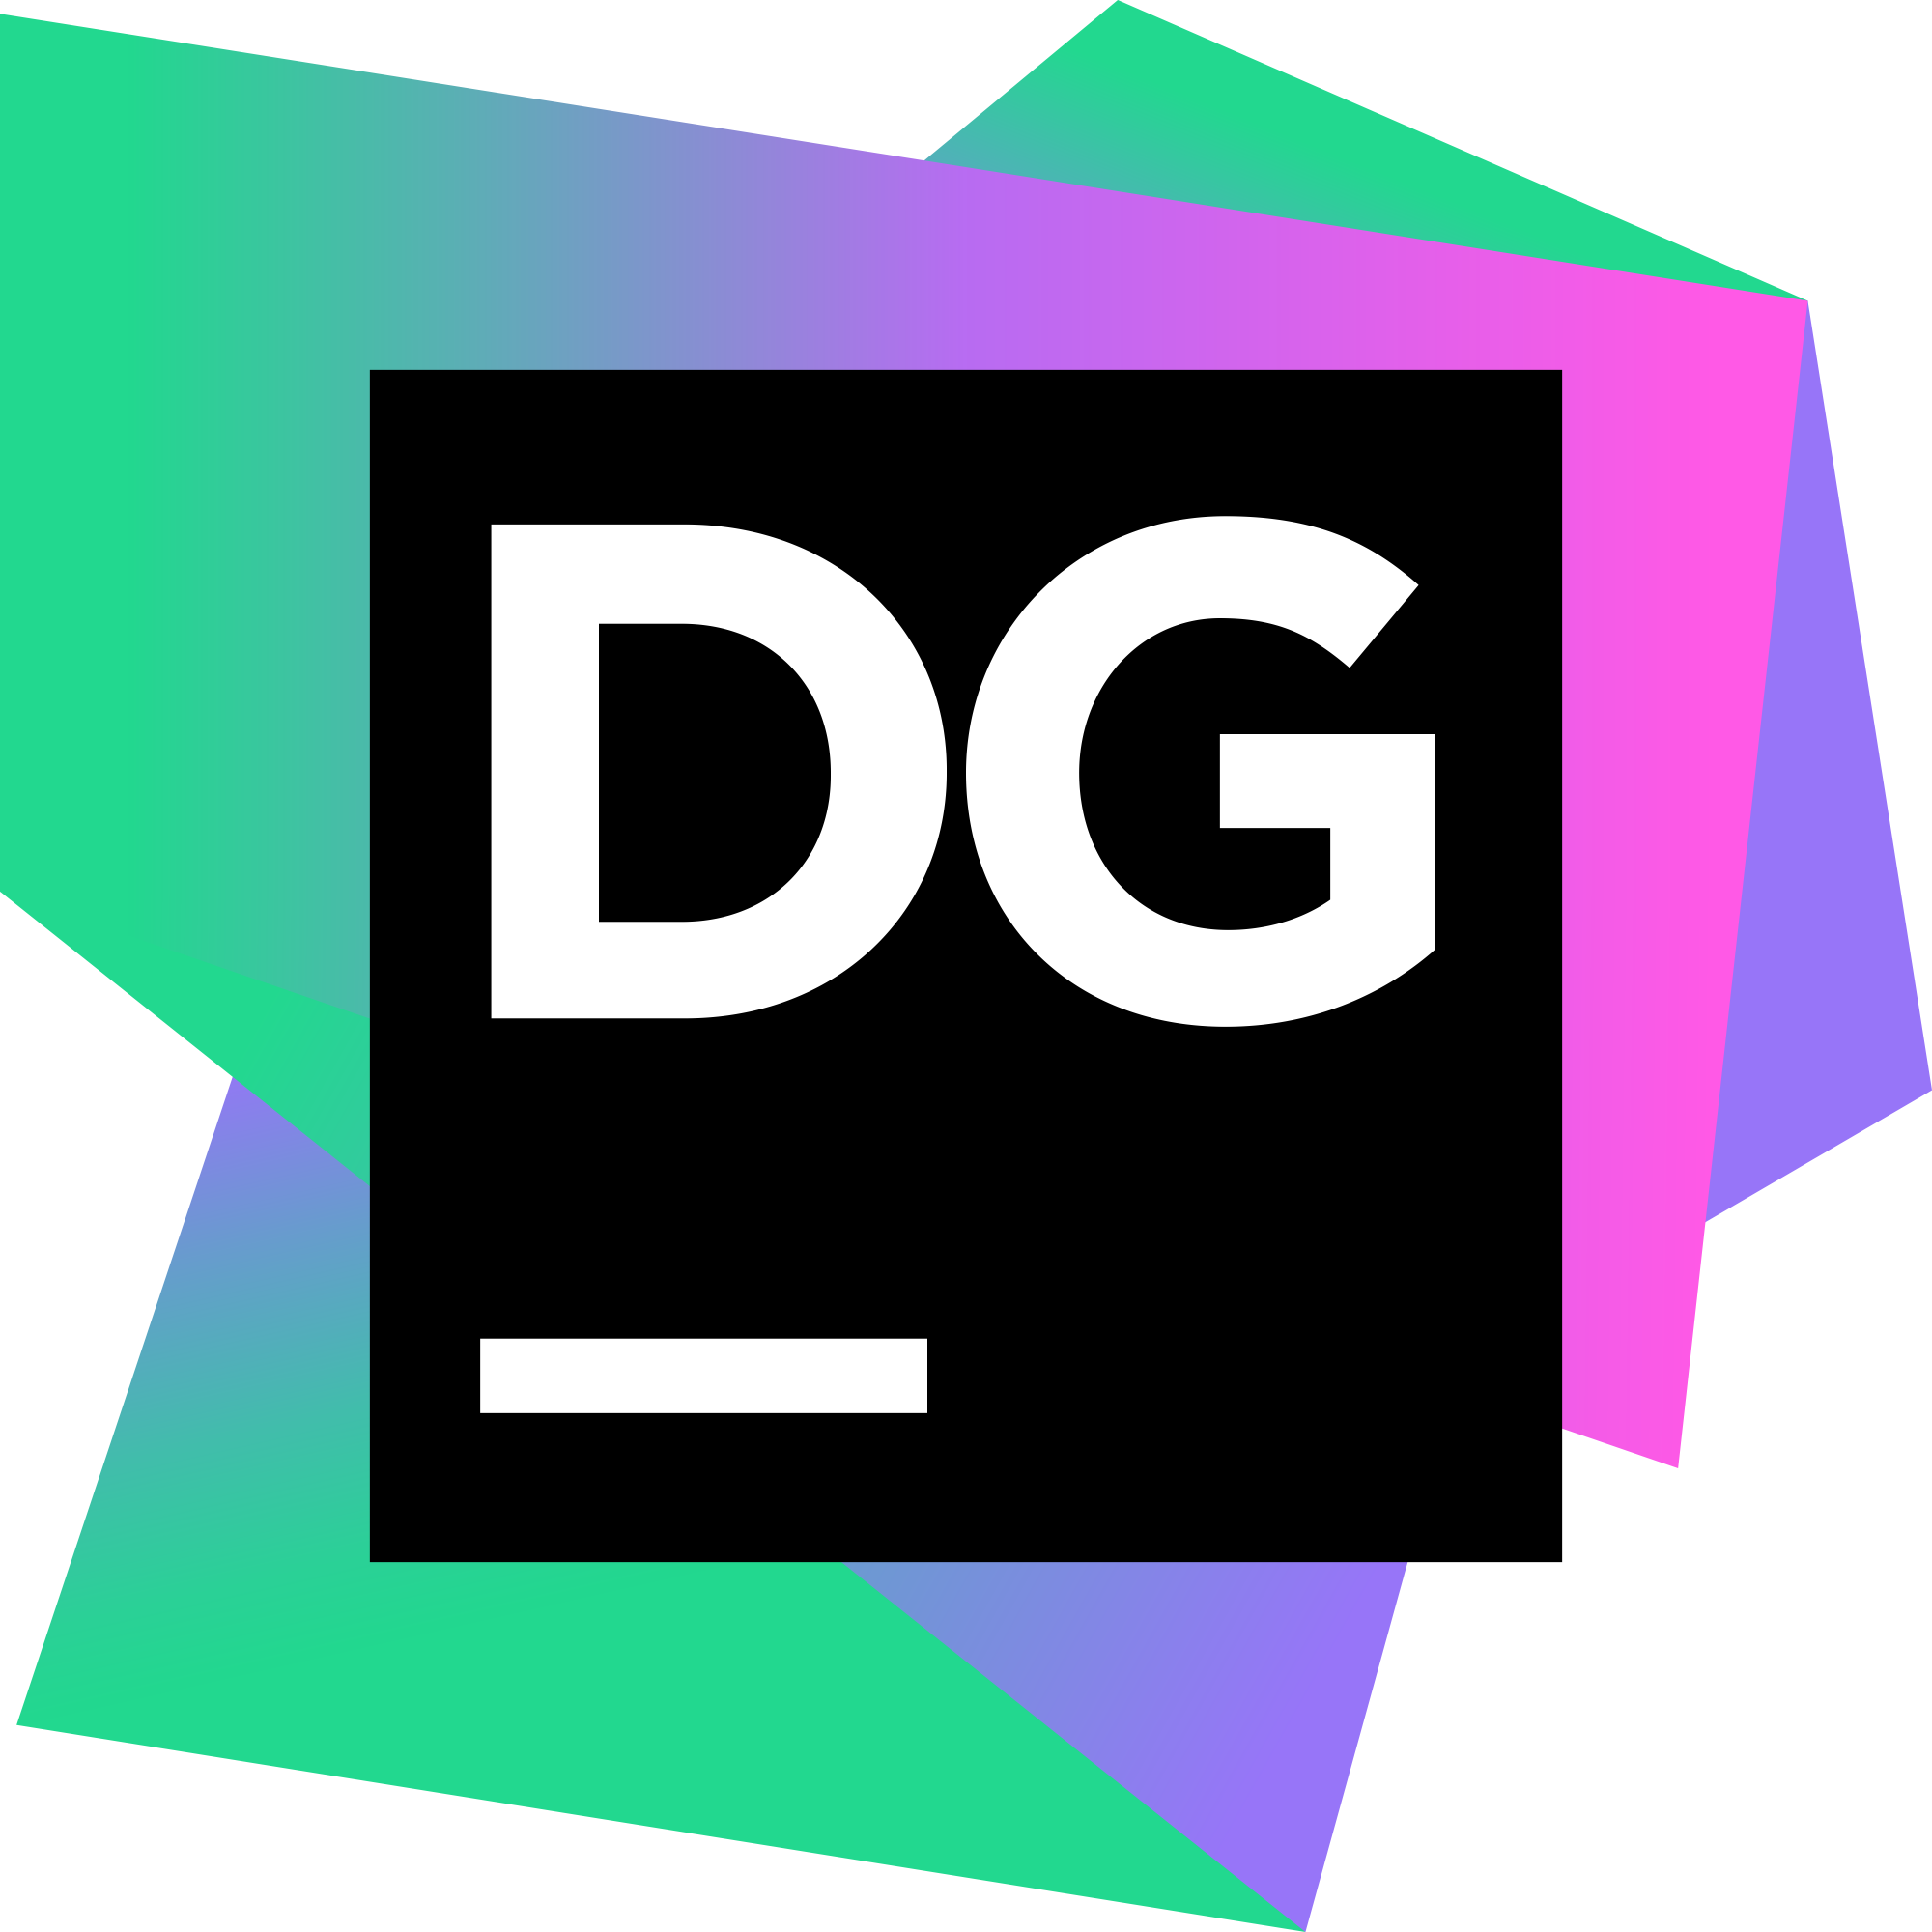 DataGrip Logo